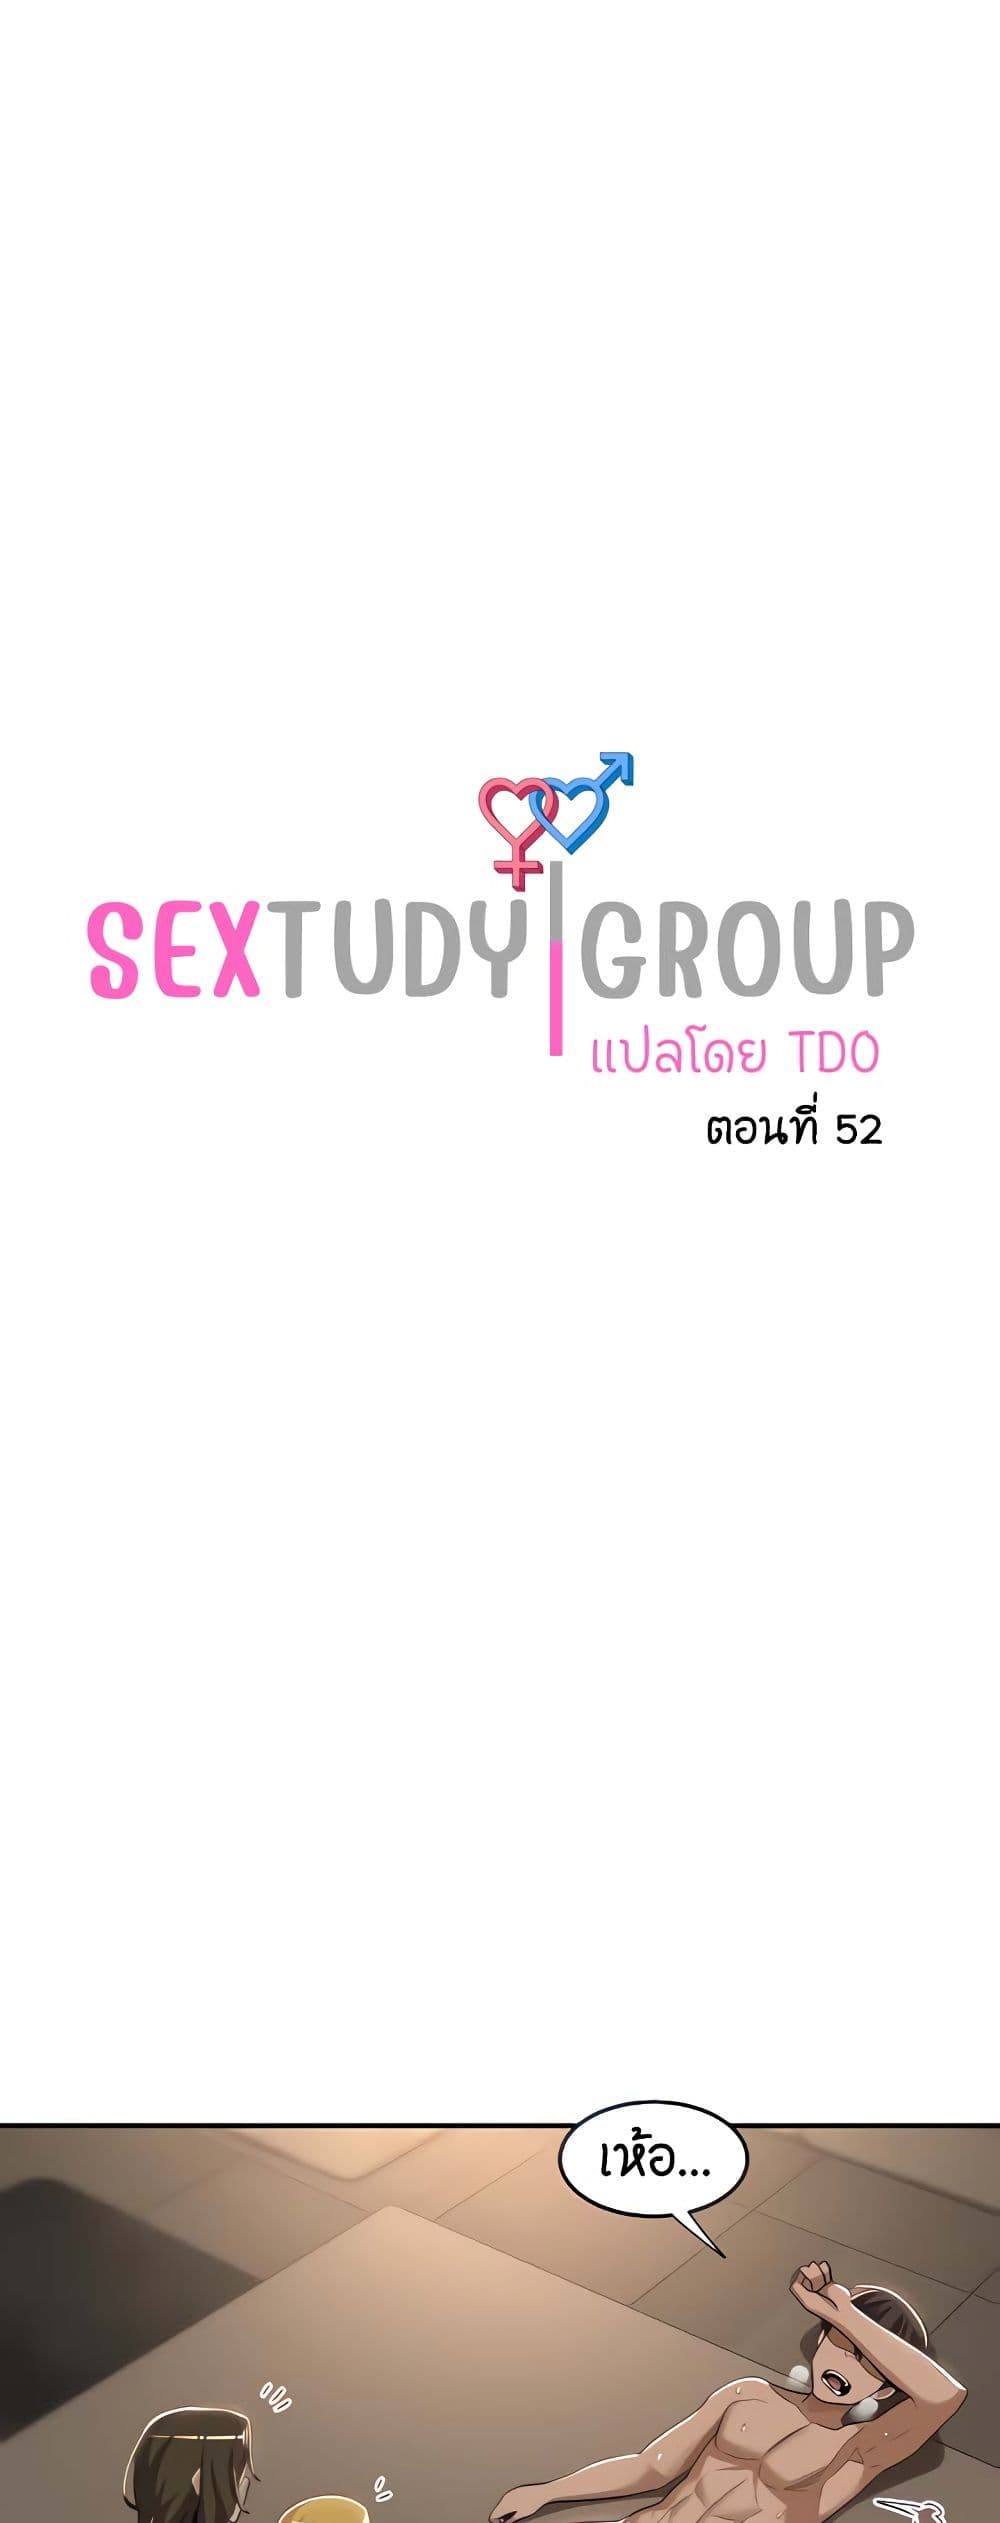 Sextudy Group 52 (1)